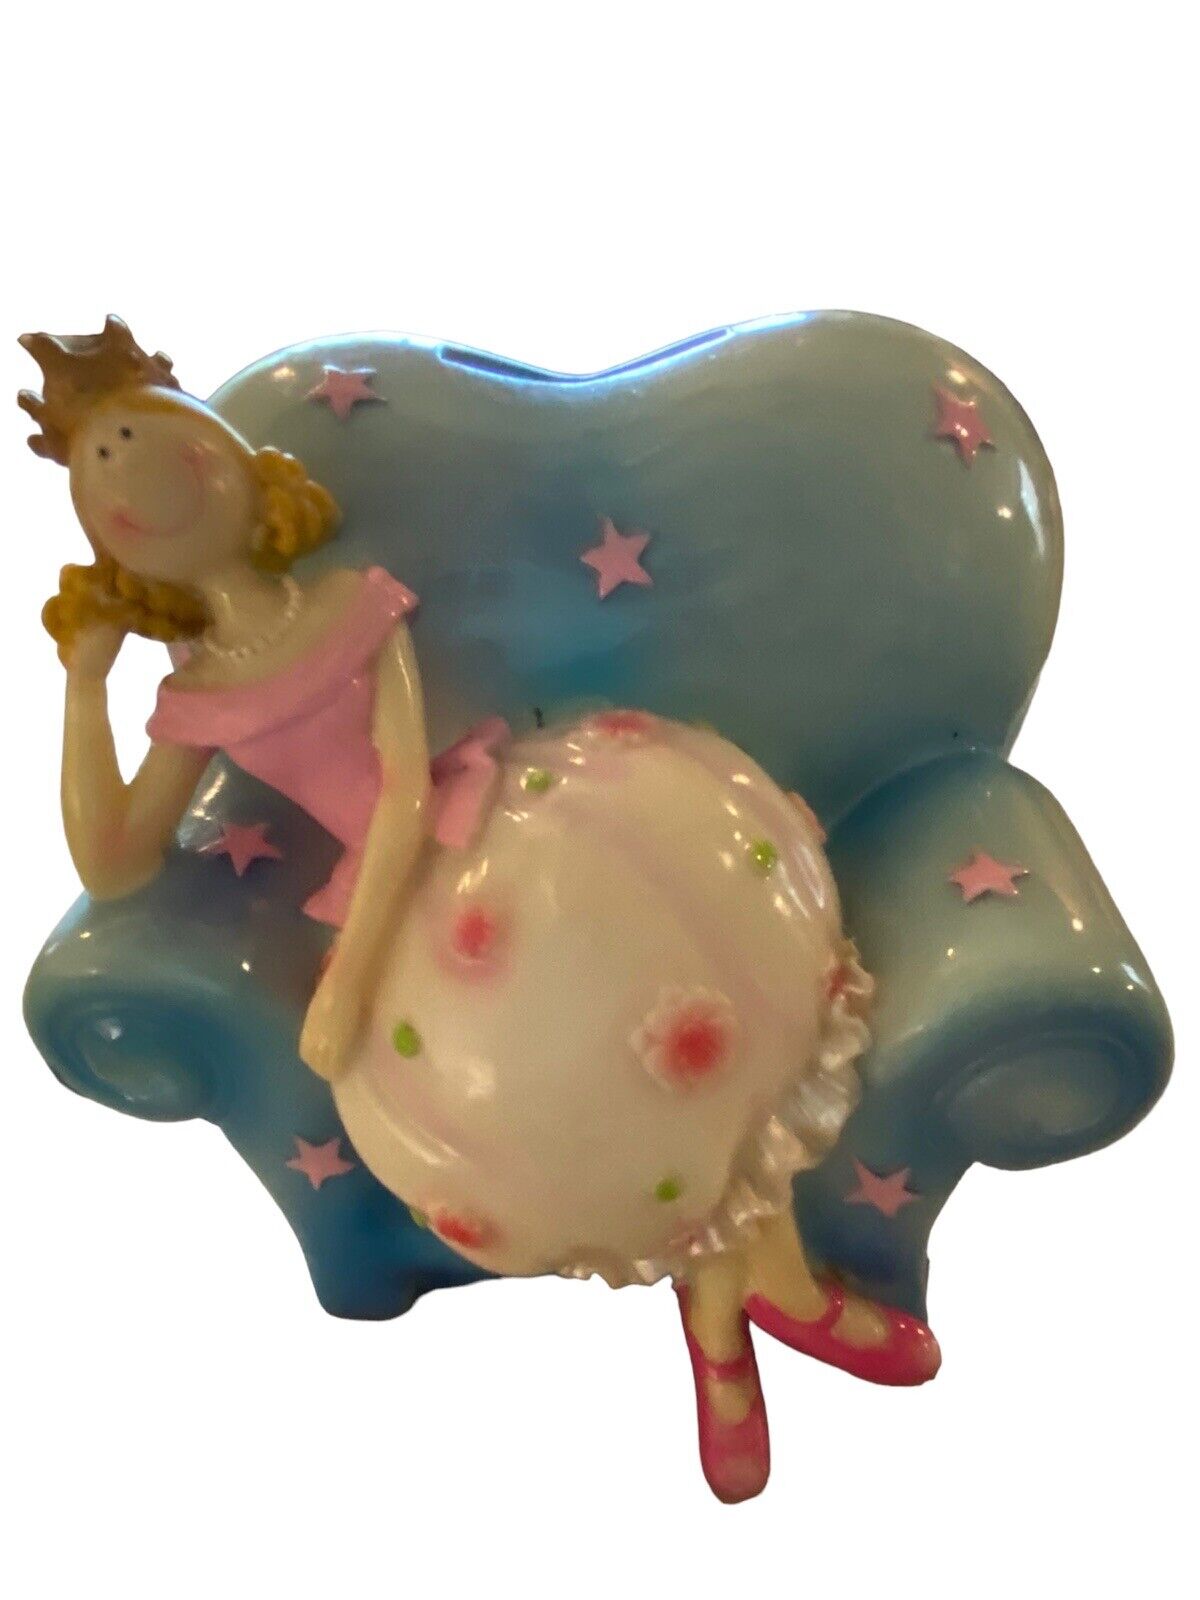 Pink princess in blue chair ceramic /resin bank stars & flowers